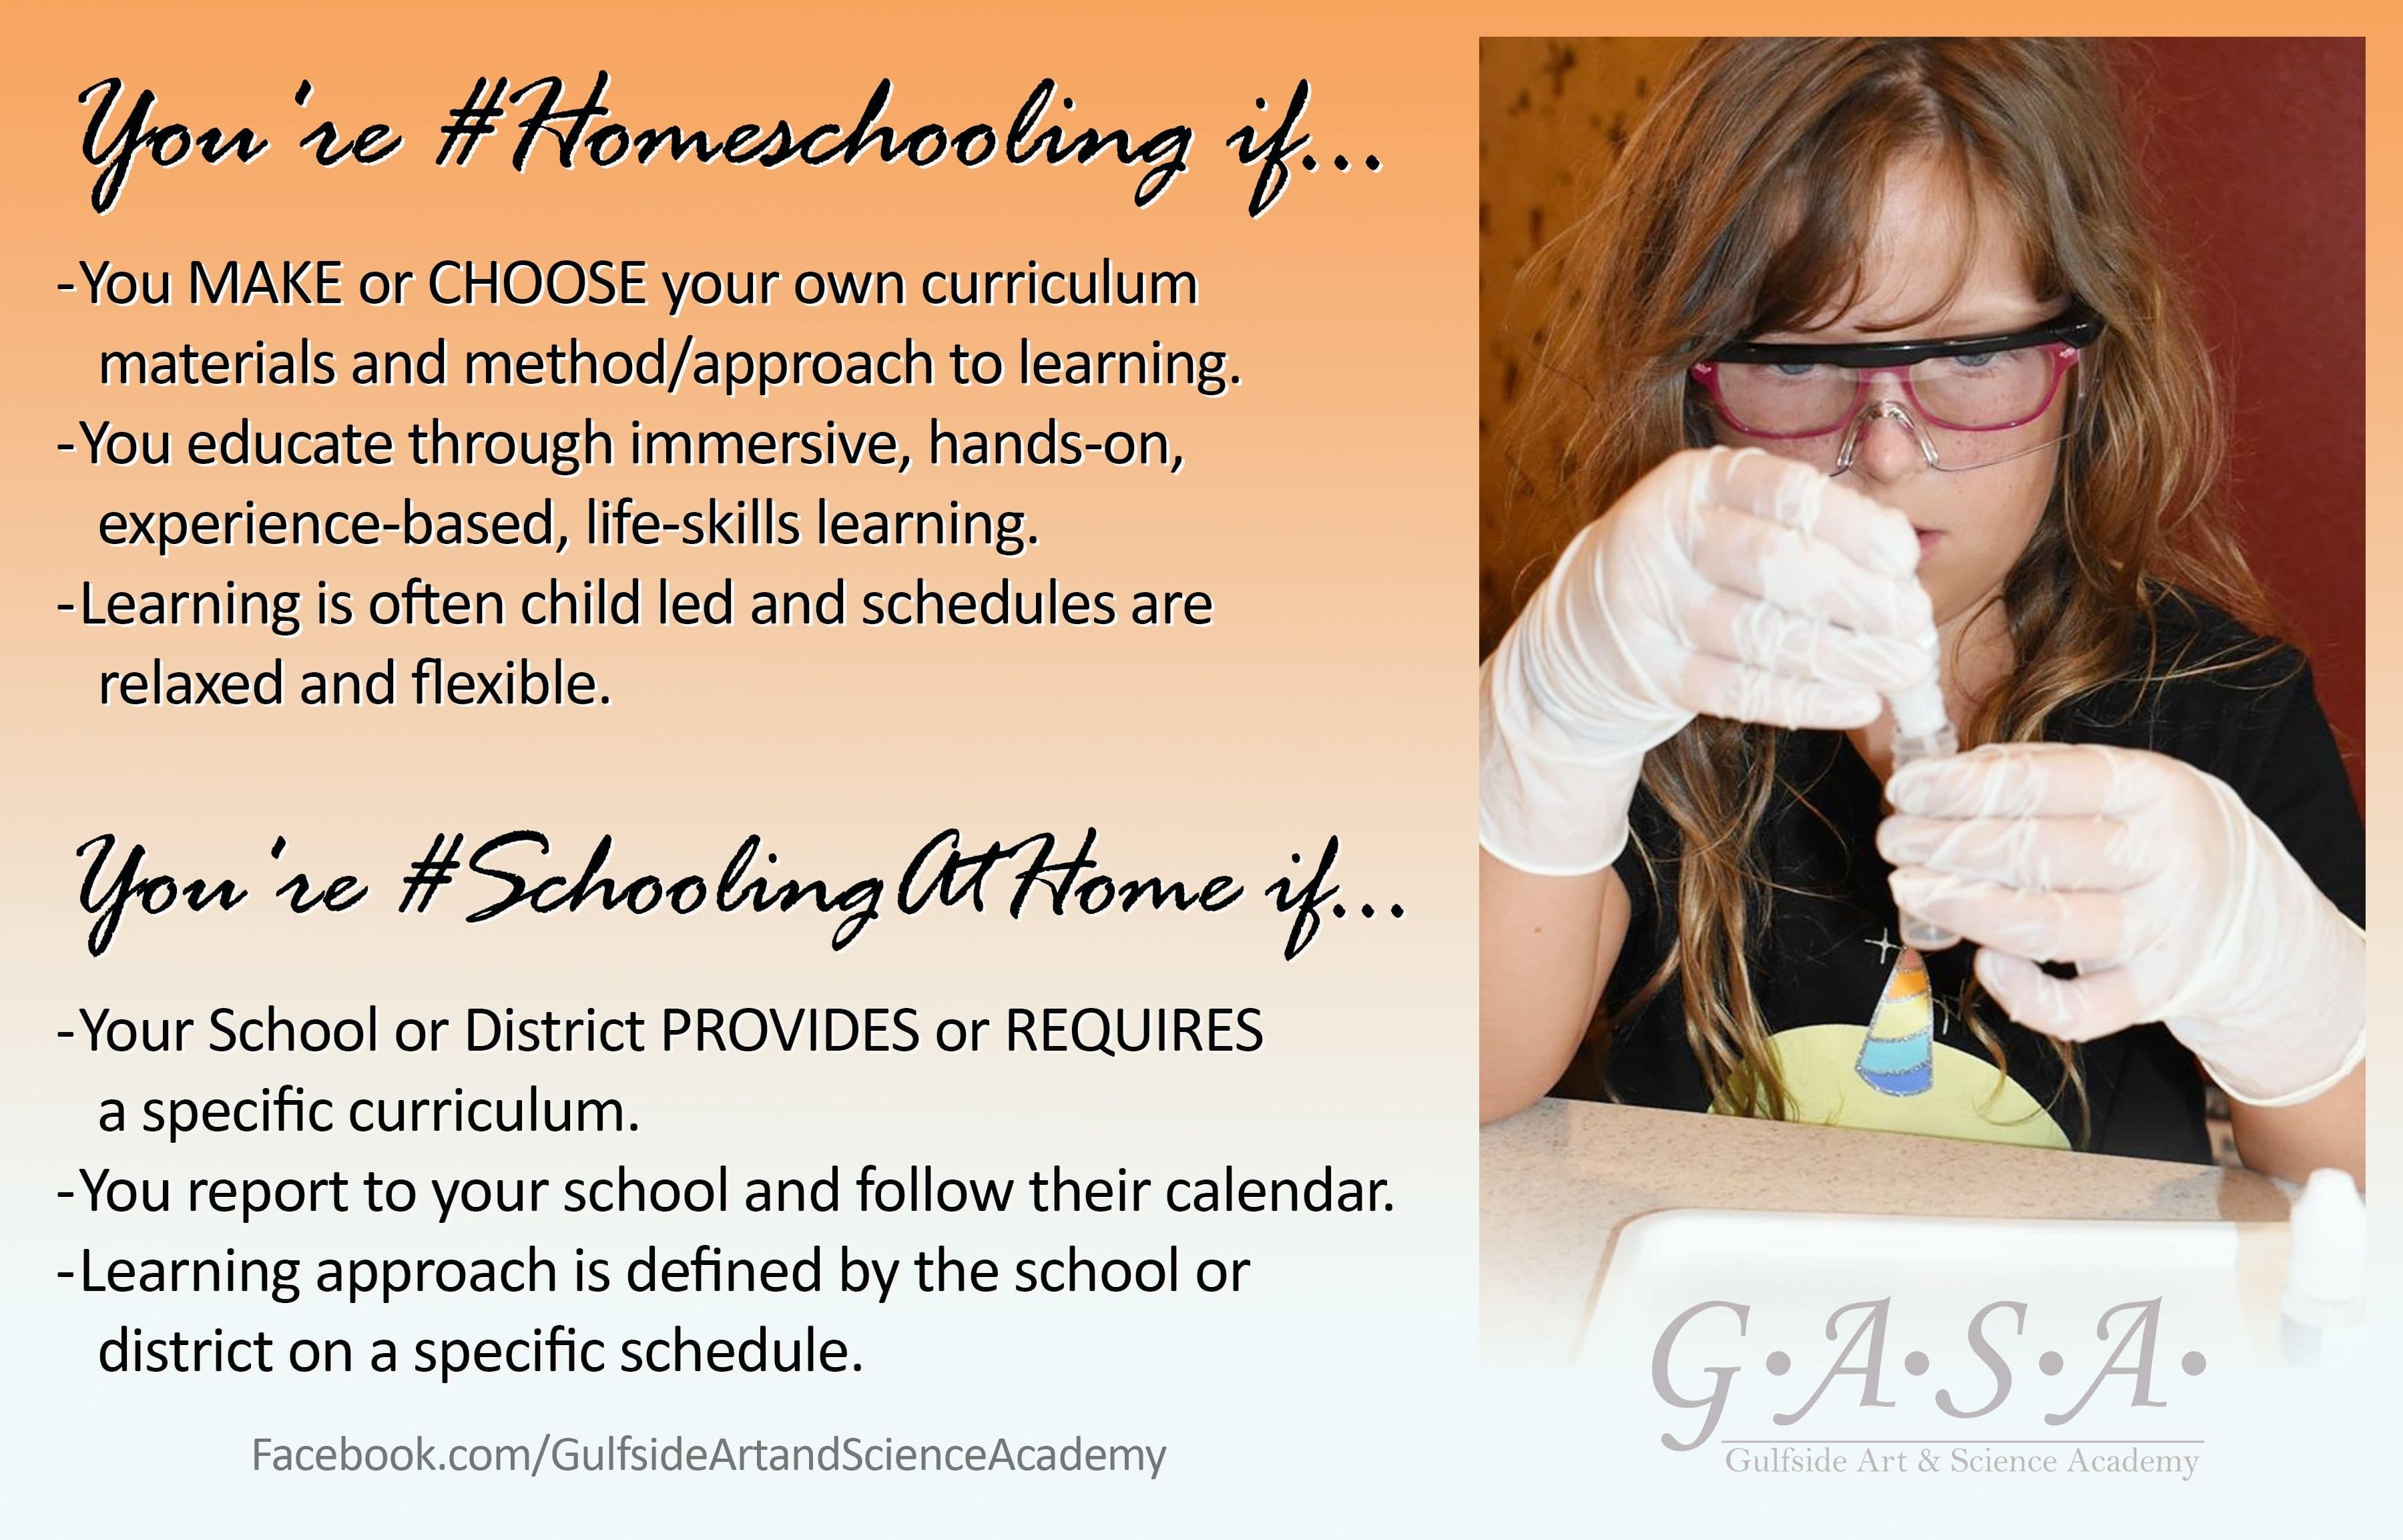 homeschooling vs schooling at home
homeschool, virtual school, eschool, distance learning, homeschool